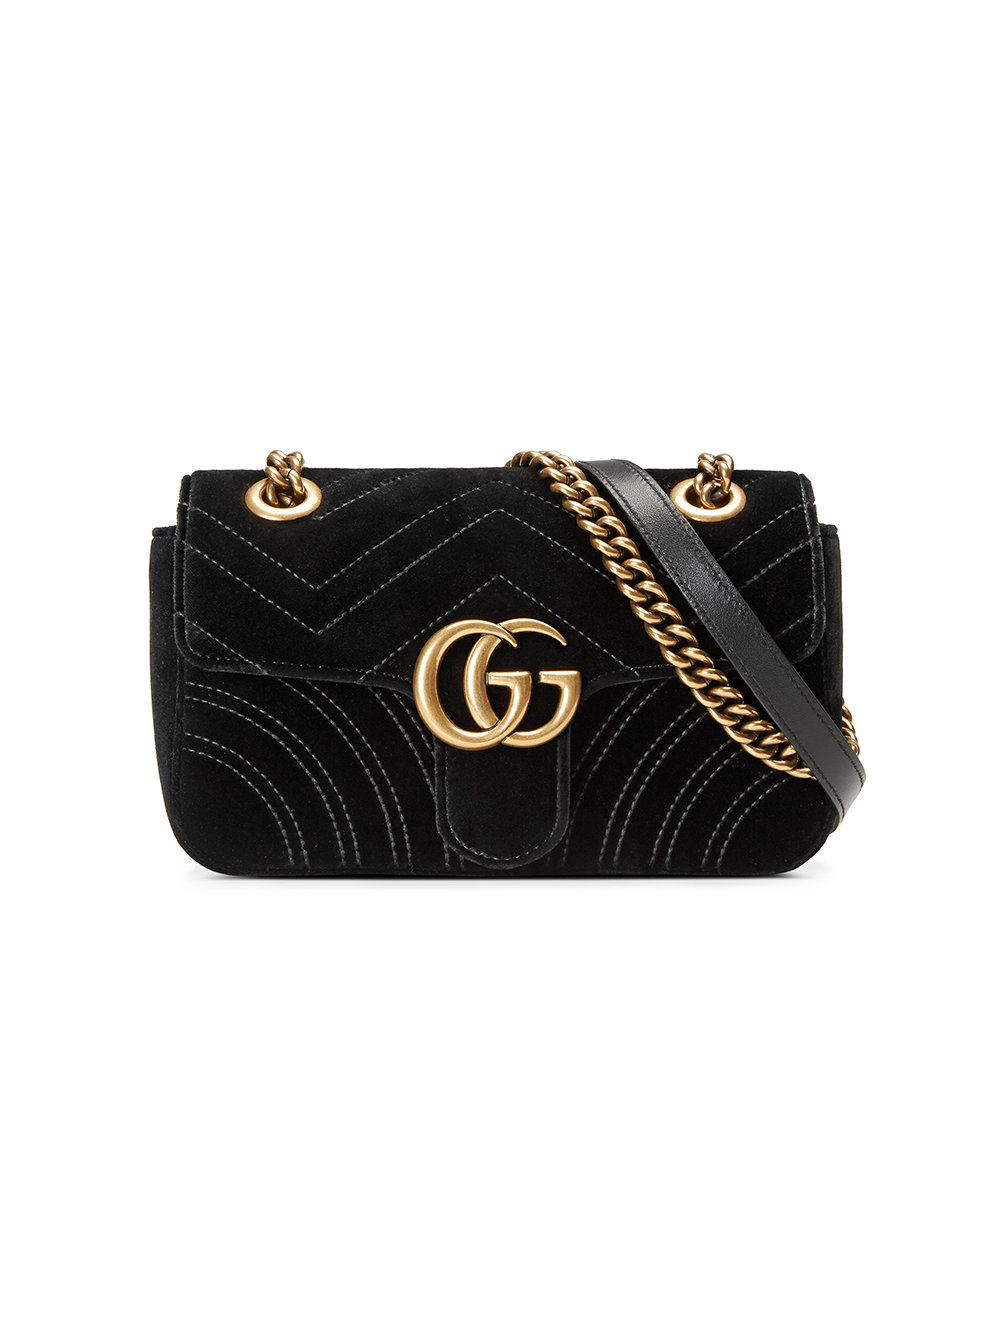 Gucci - GG Marmont Velvet Mini Bag - Black | FASHION STYLE FAN